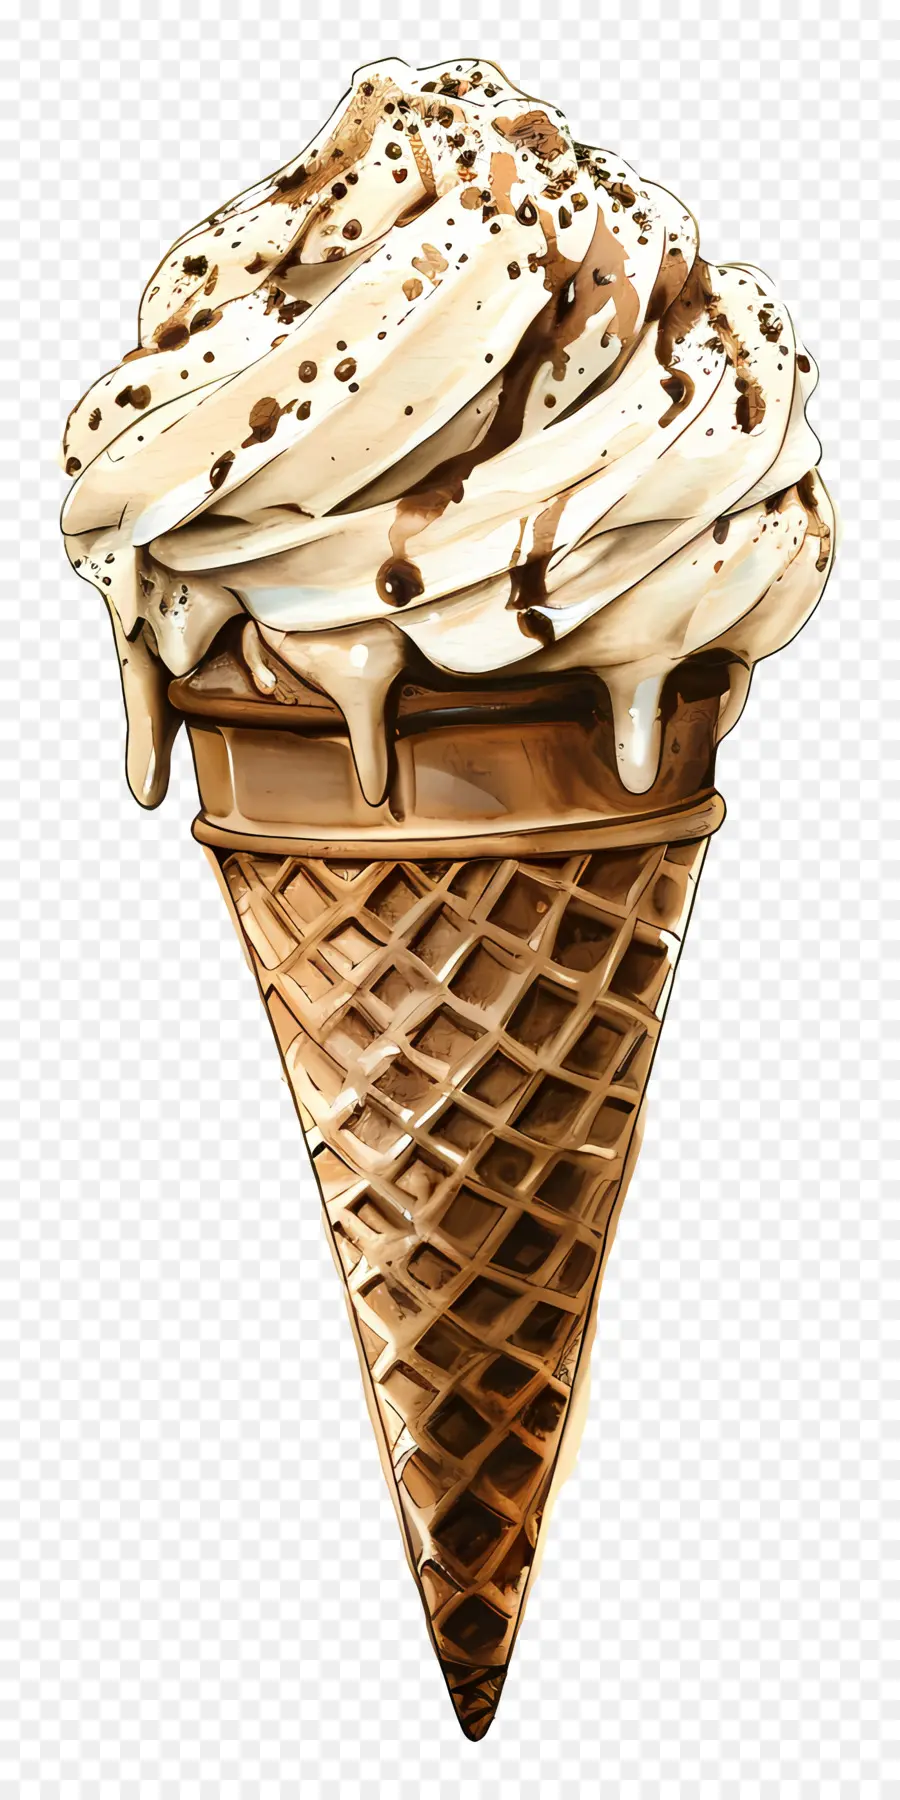 cone ice cream chocolate ice cream ice cream cone whipped cream cherry